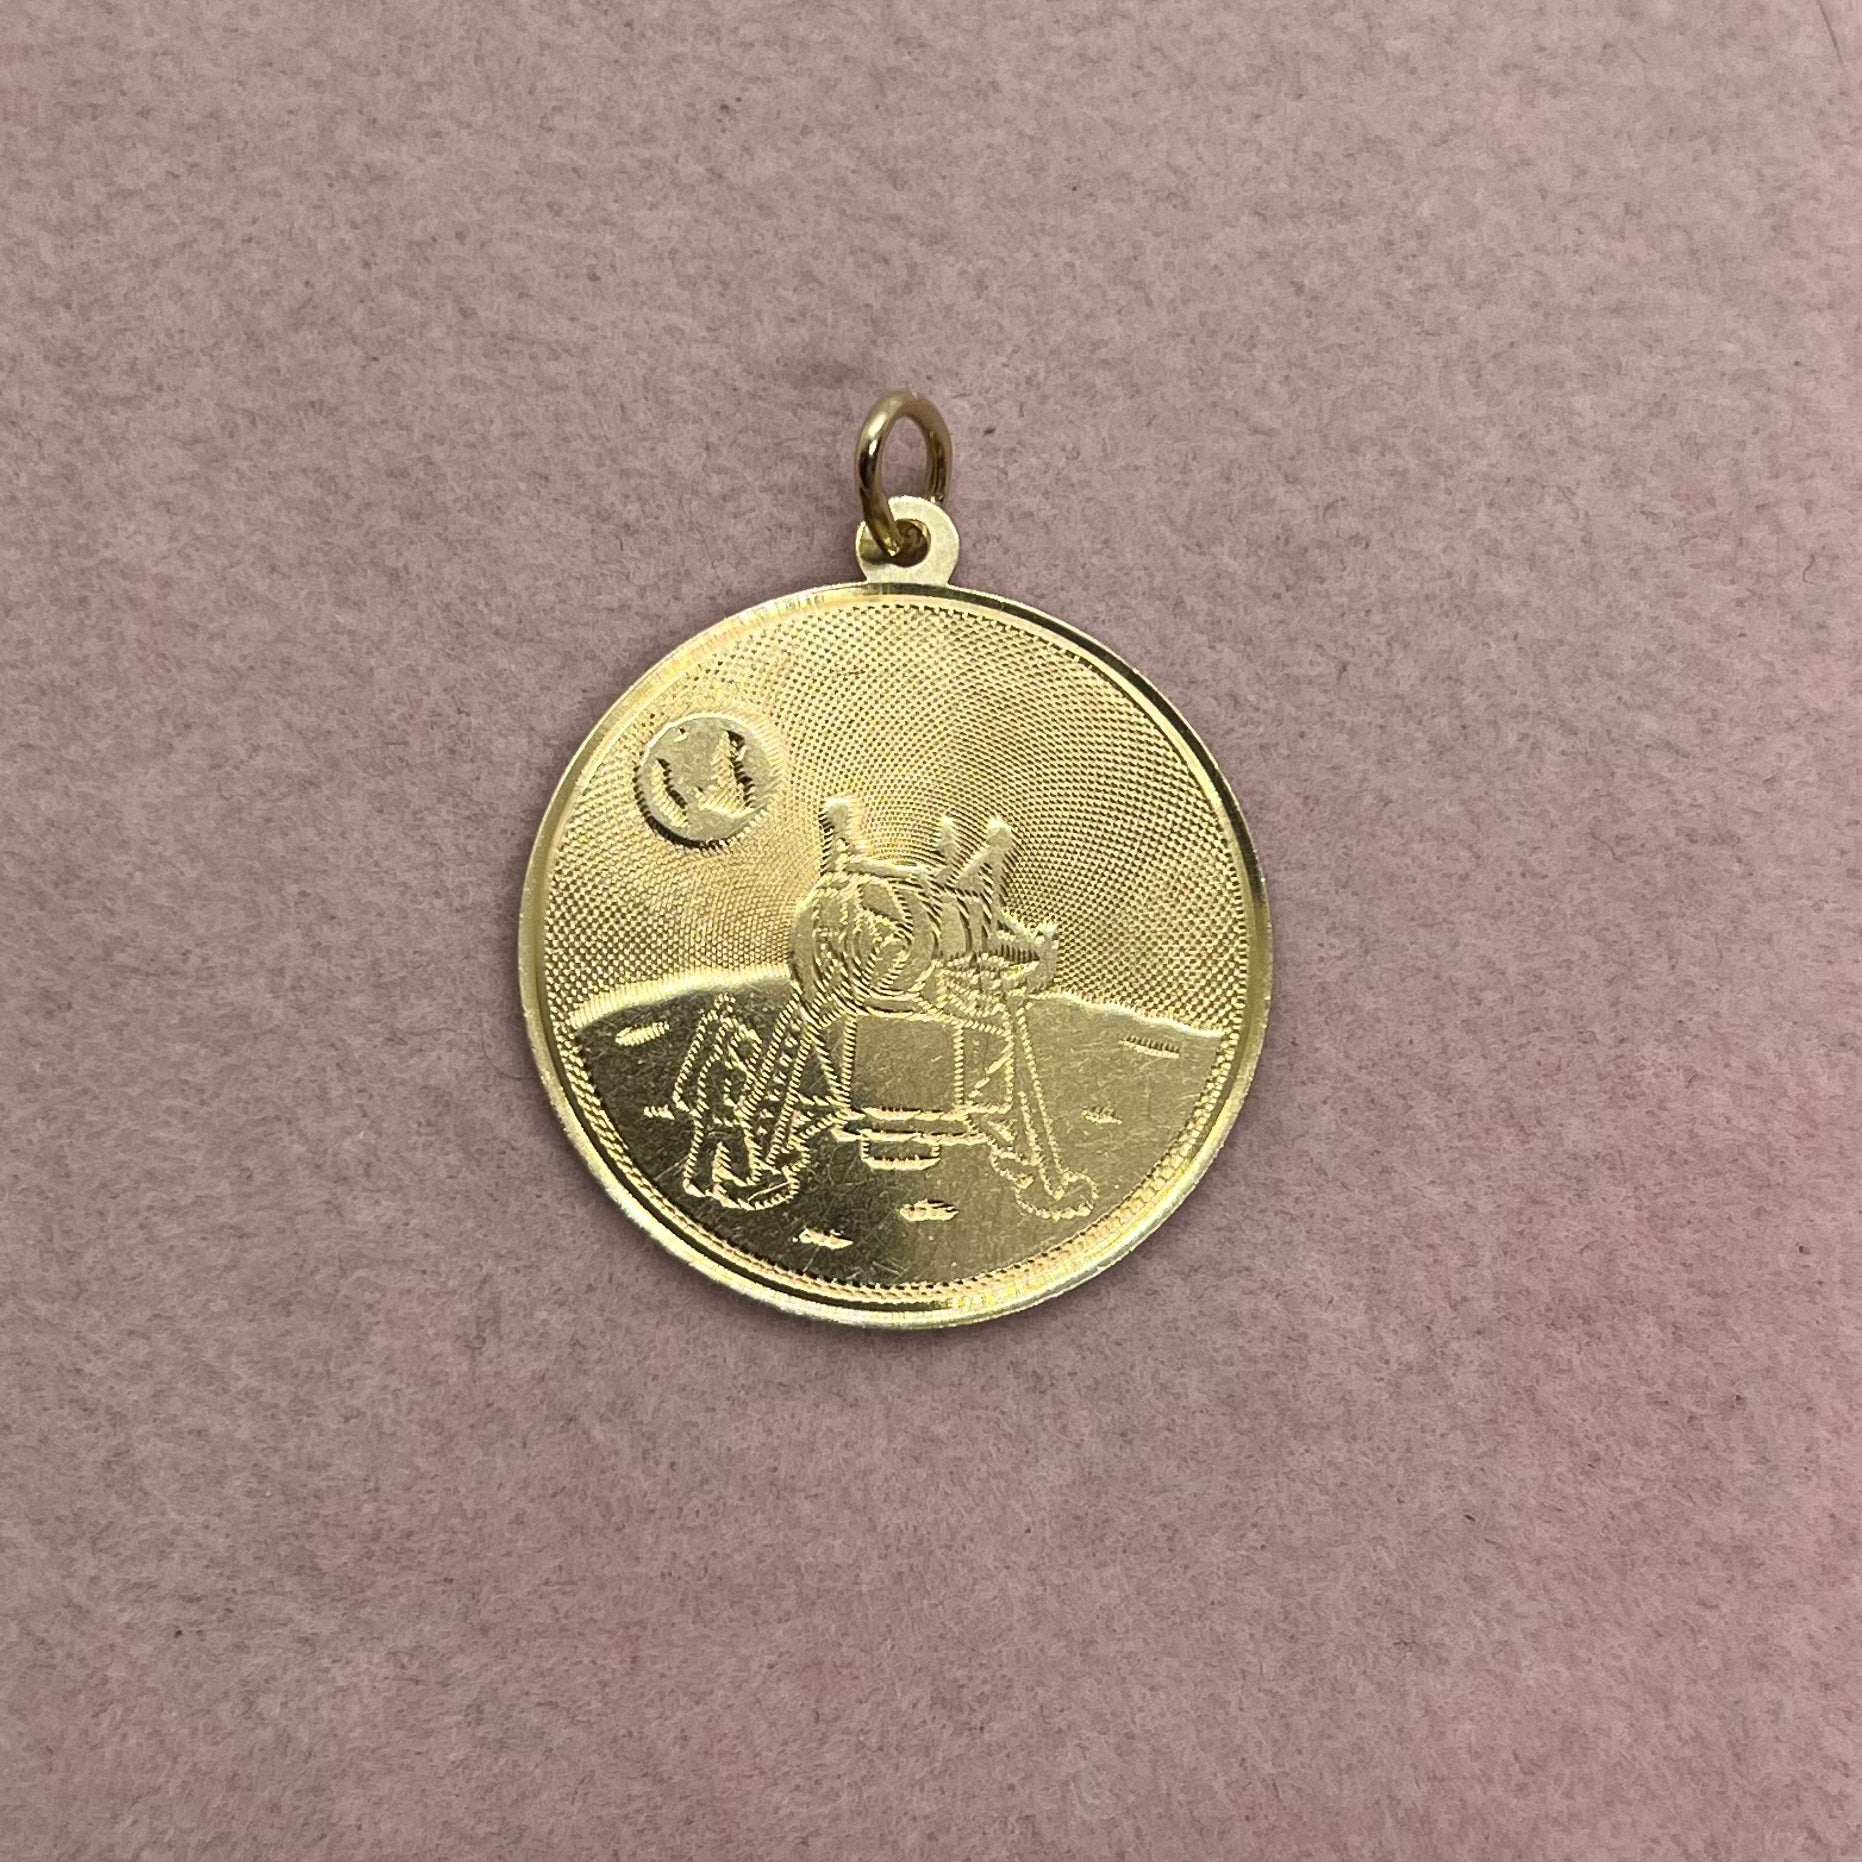 Commemorative Moon Landing Medallion